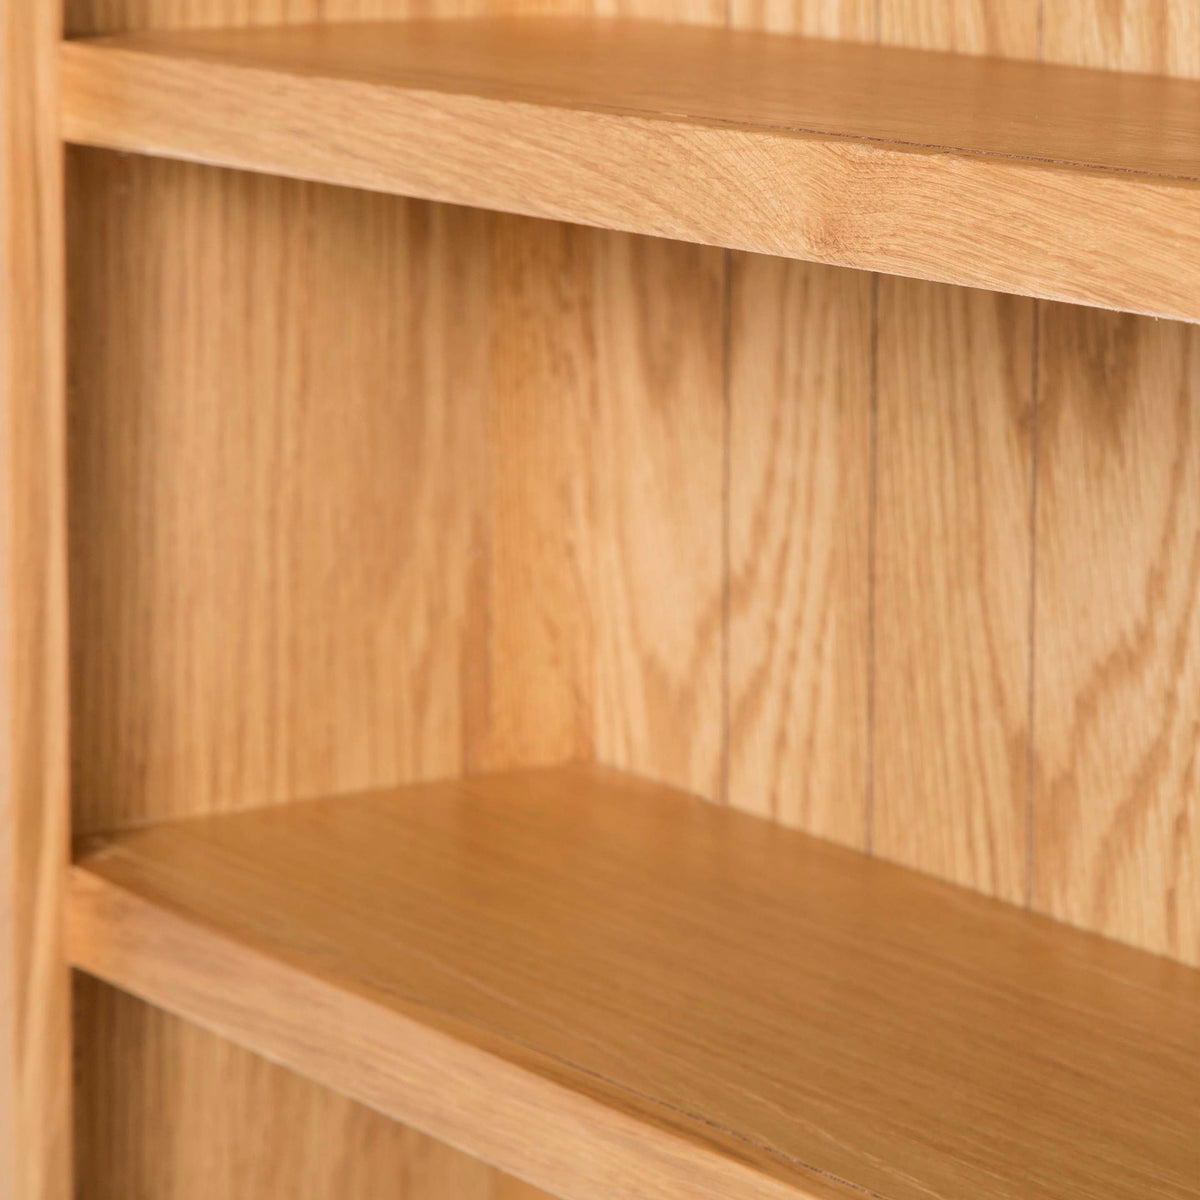 London Oak Small Bookcase - Close up of back of shelf